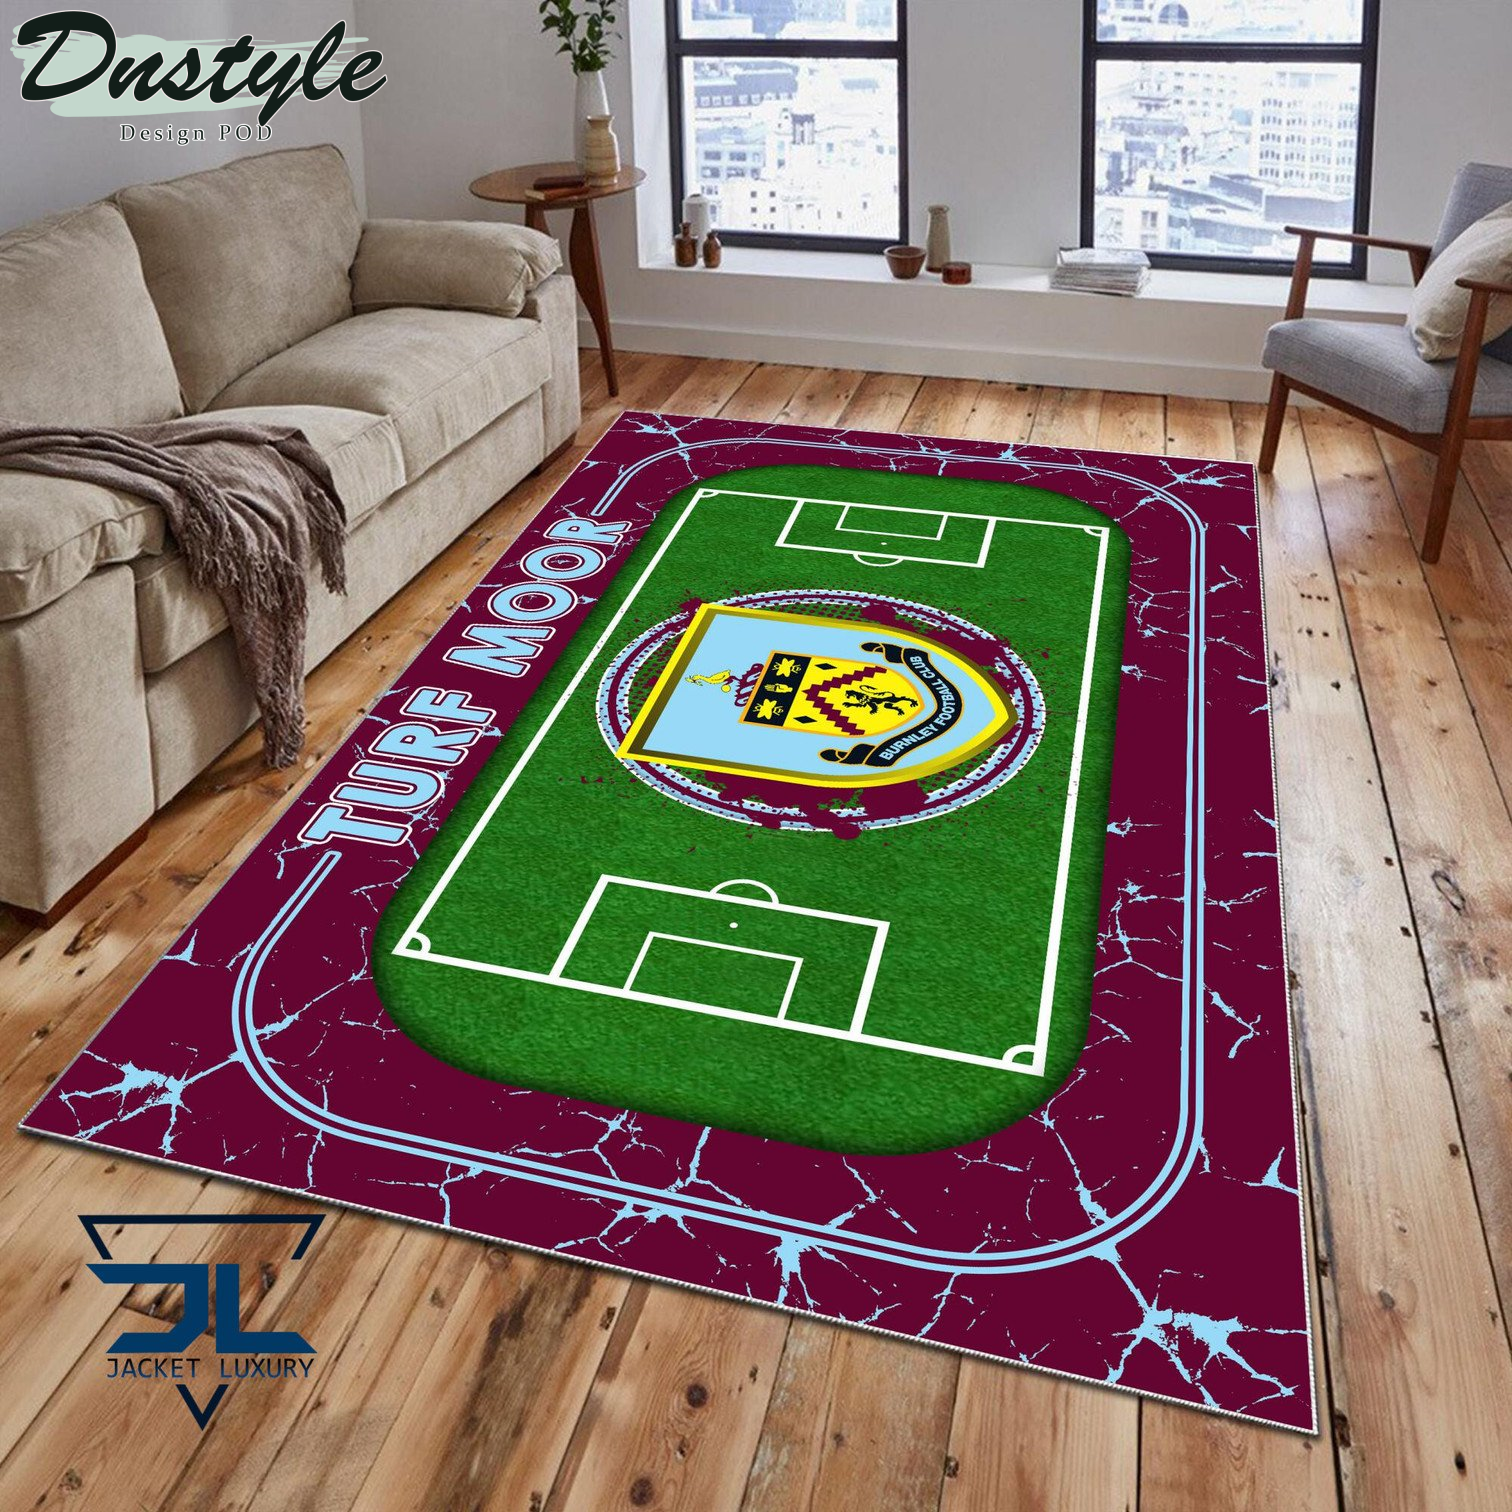 Burnley F.C Rug Carpet